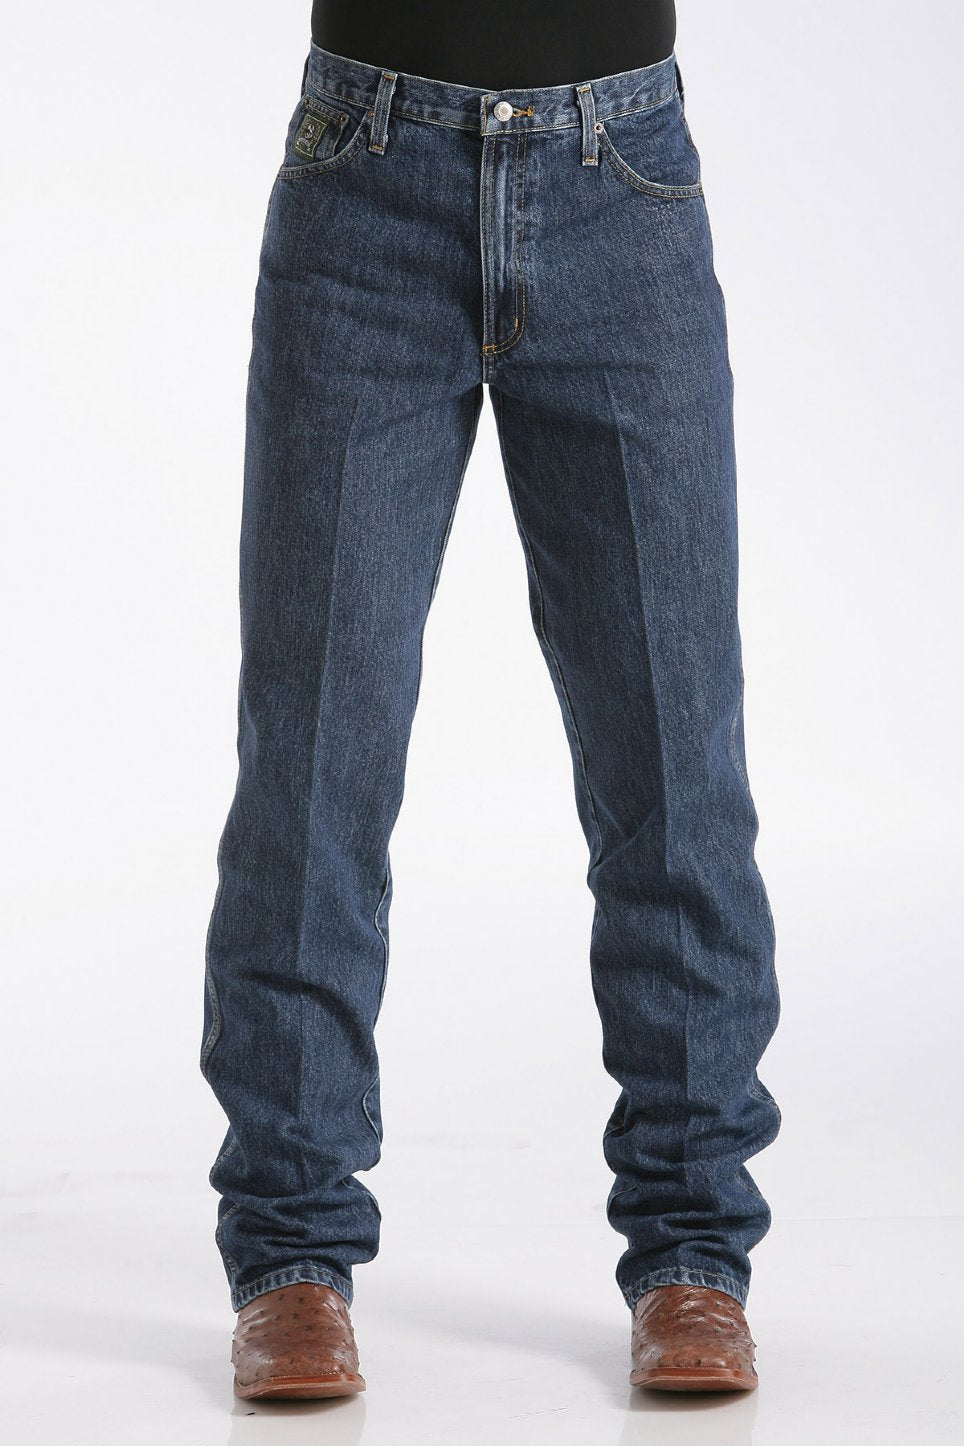 Cinch Mens Green Label Relaxed Fit Jeans 34 Inch Leg (Dark Stonewash)